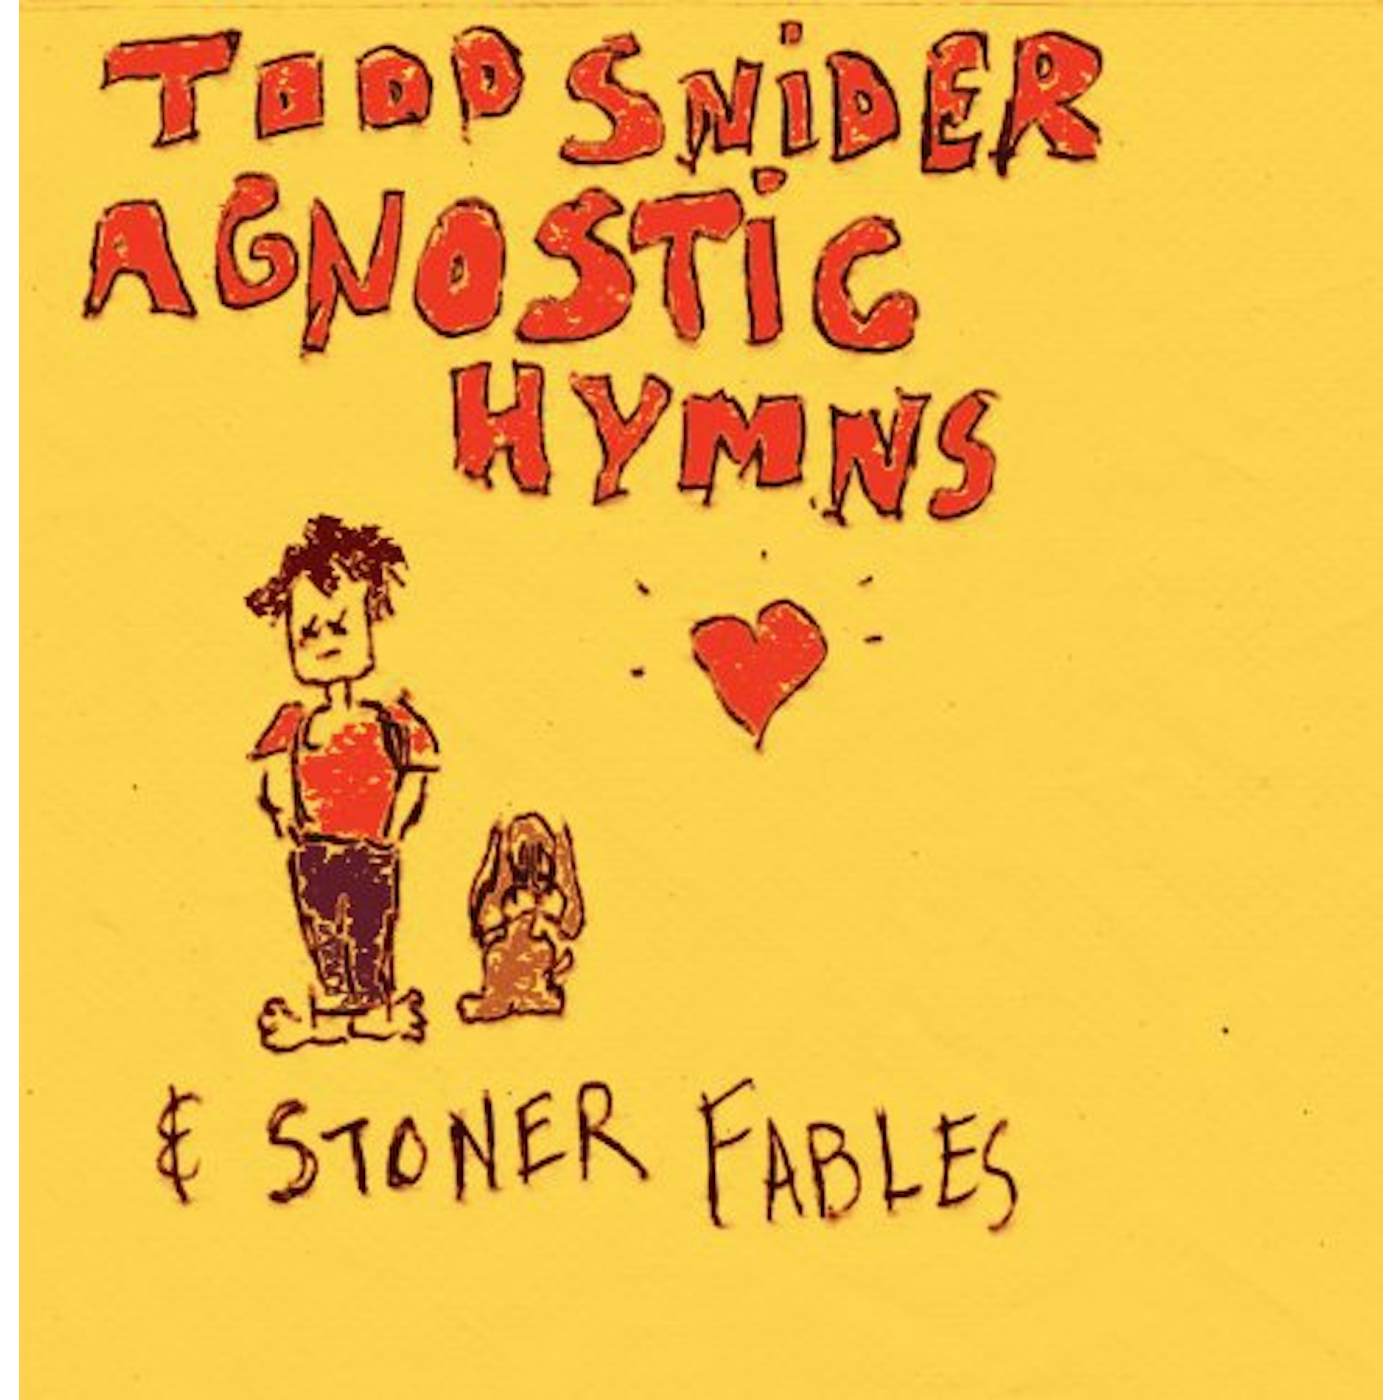 Todd Snider Agnostic Hymns & Stoner Fables Vinyl Record